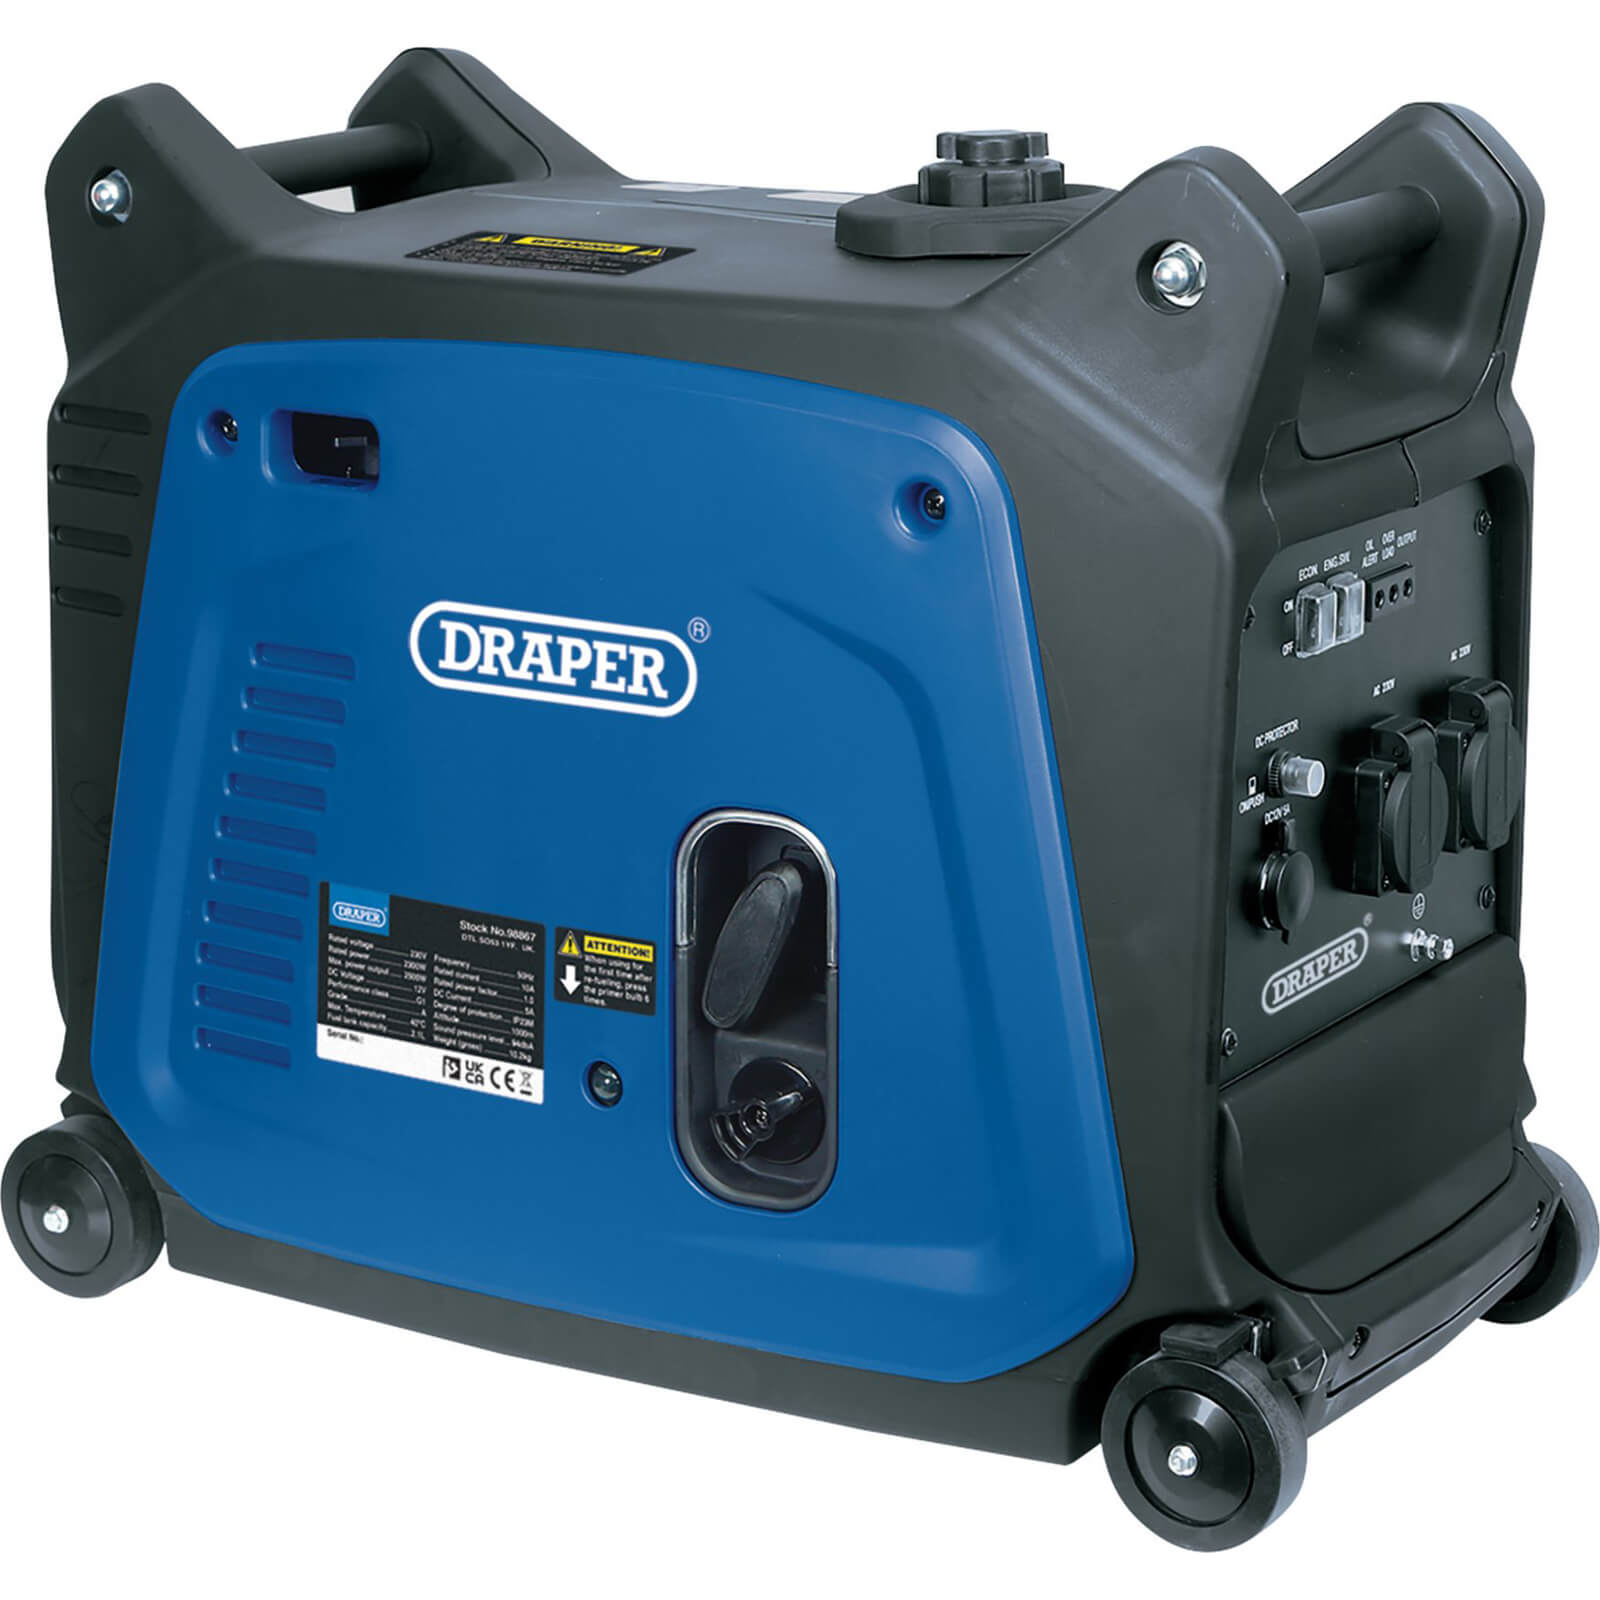 Image of Draper 95197 Petrol Inverter Generator 2300W